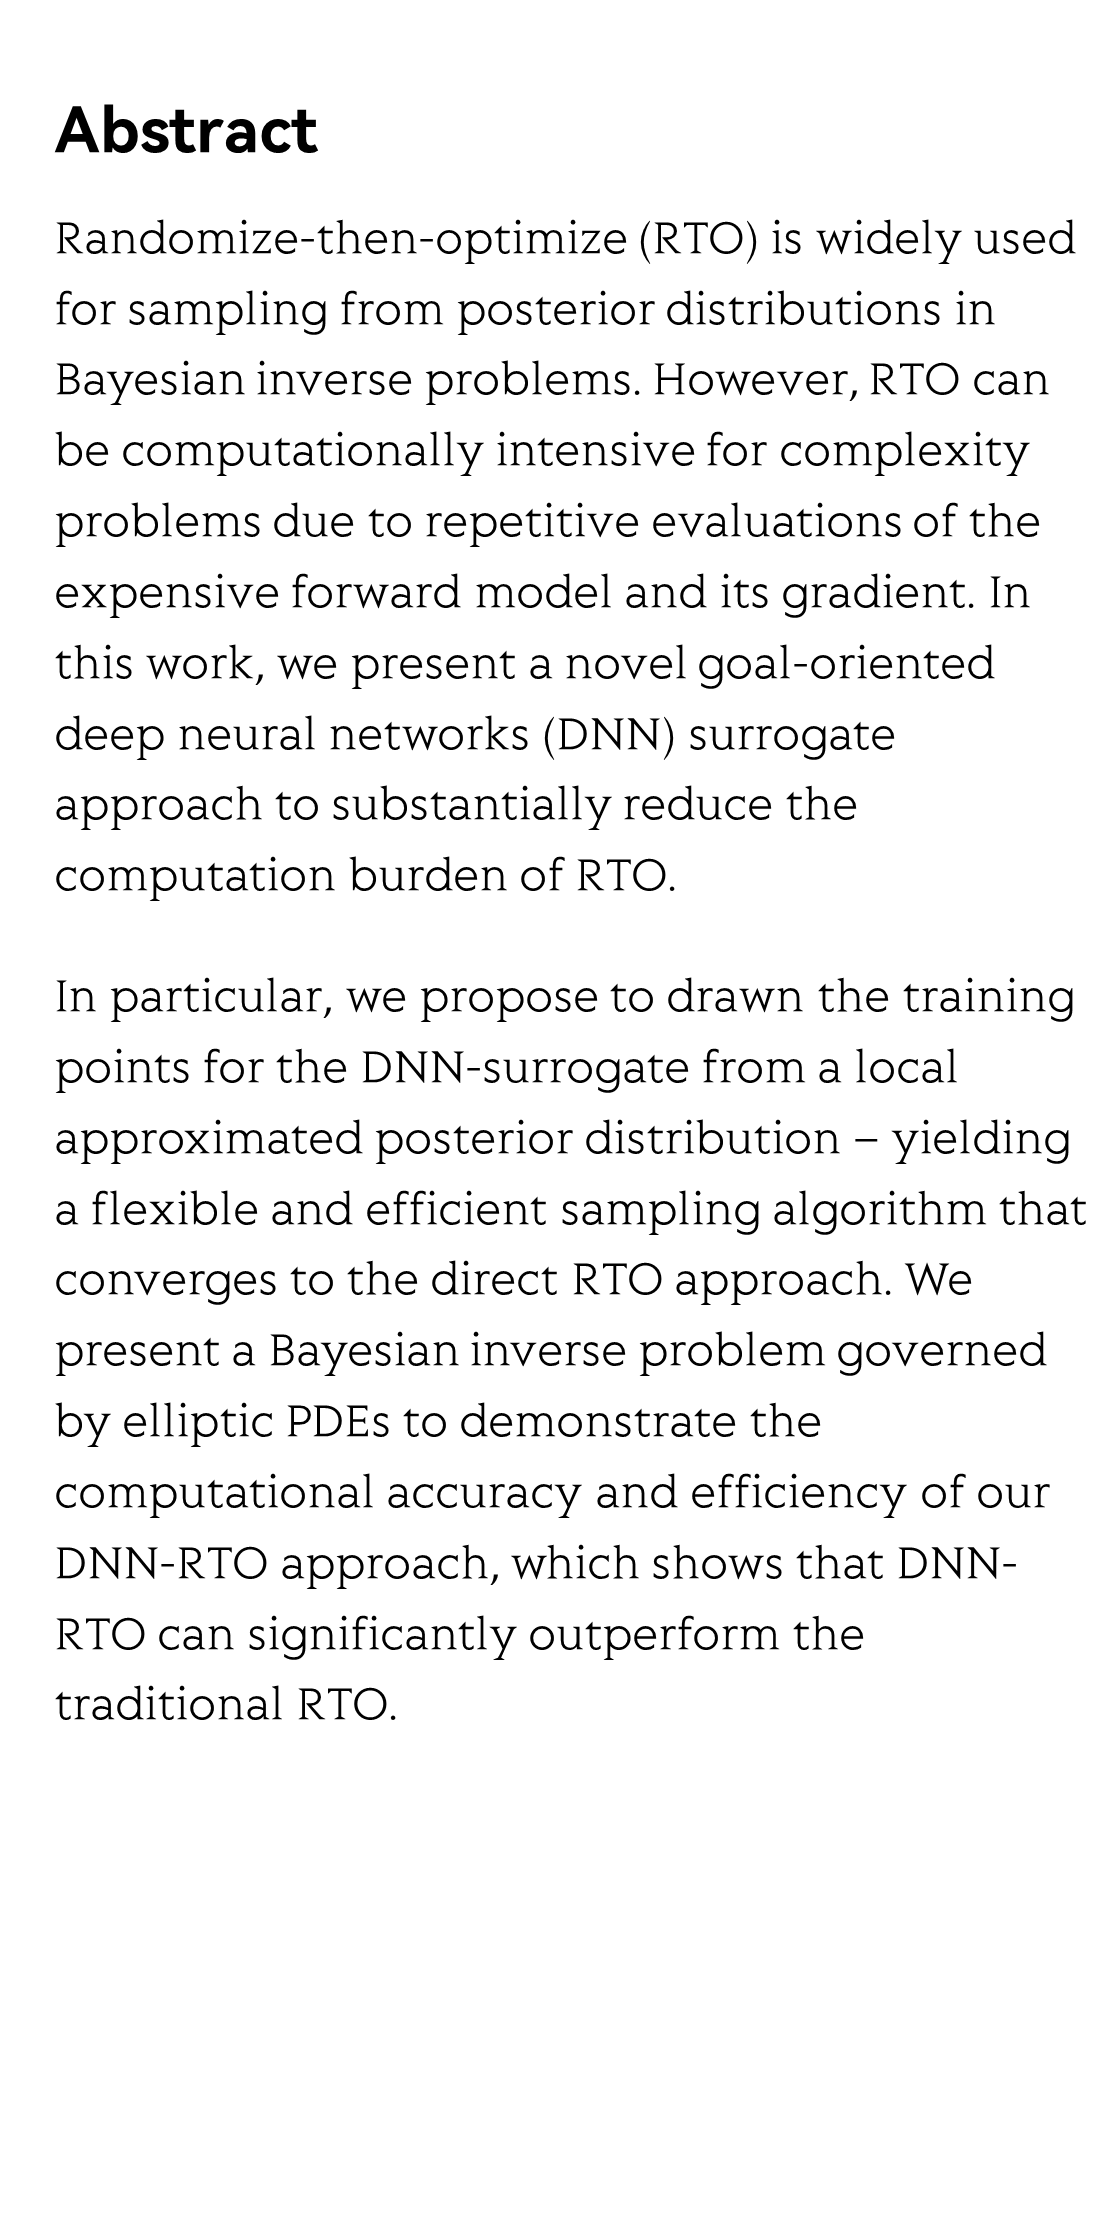 An acceleration strategy for randomize-then-optimize sampling via deep neural networks_2